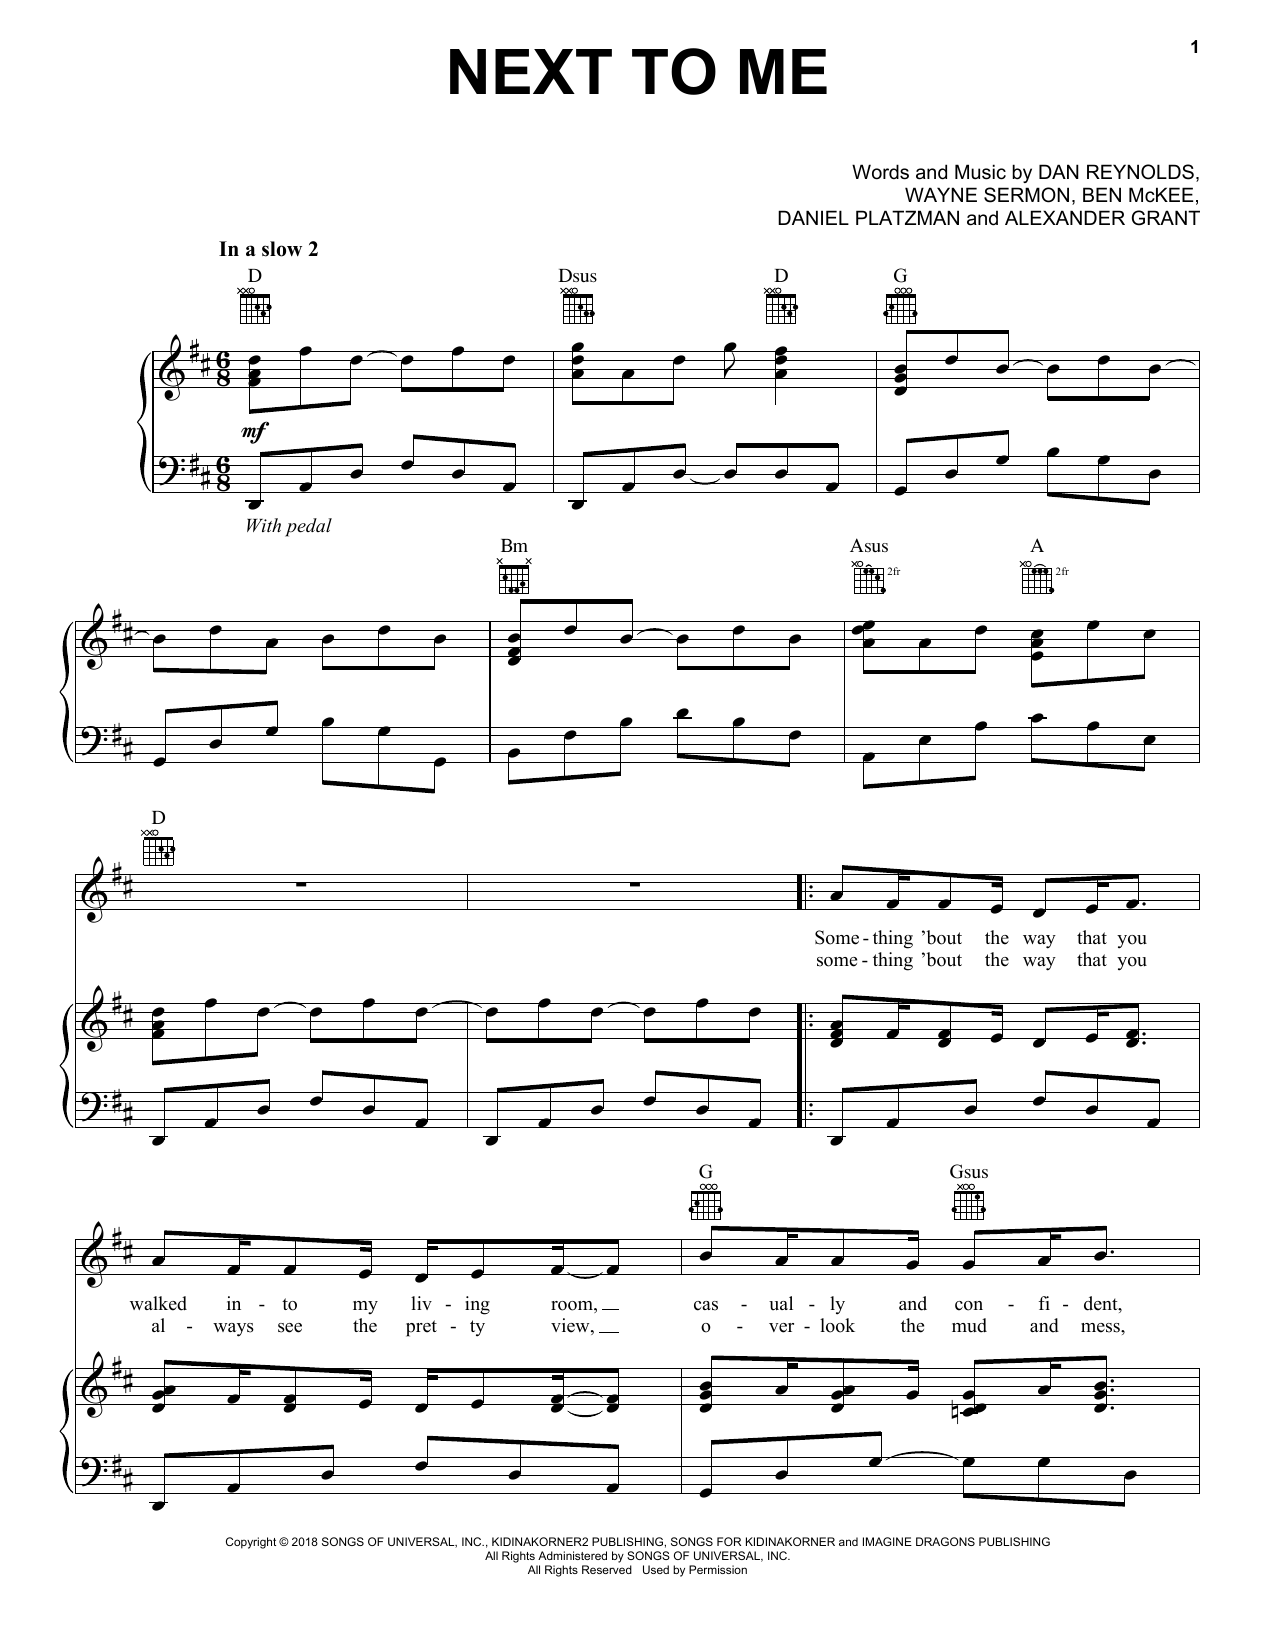 Imagine Dragons Next To Me Sheet Music Notes & Chords for Ukulele - Download or Print PDF